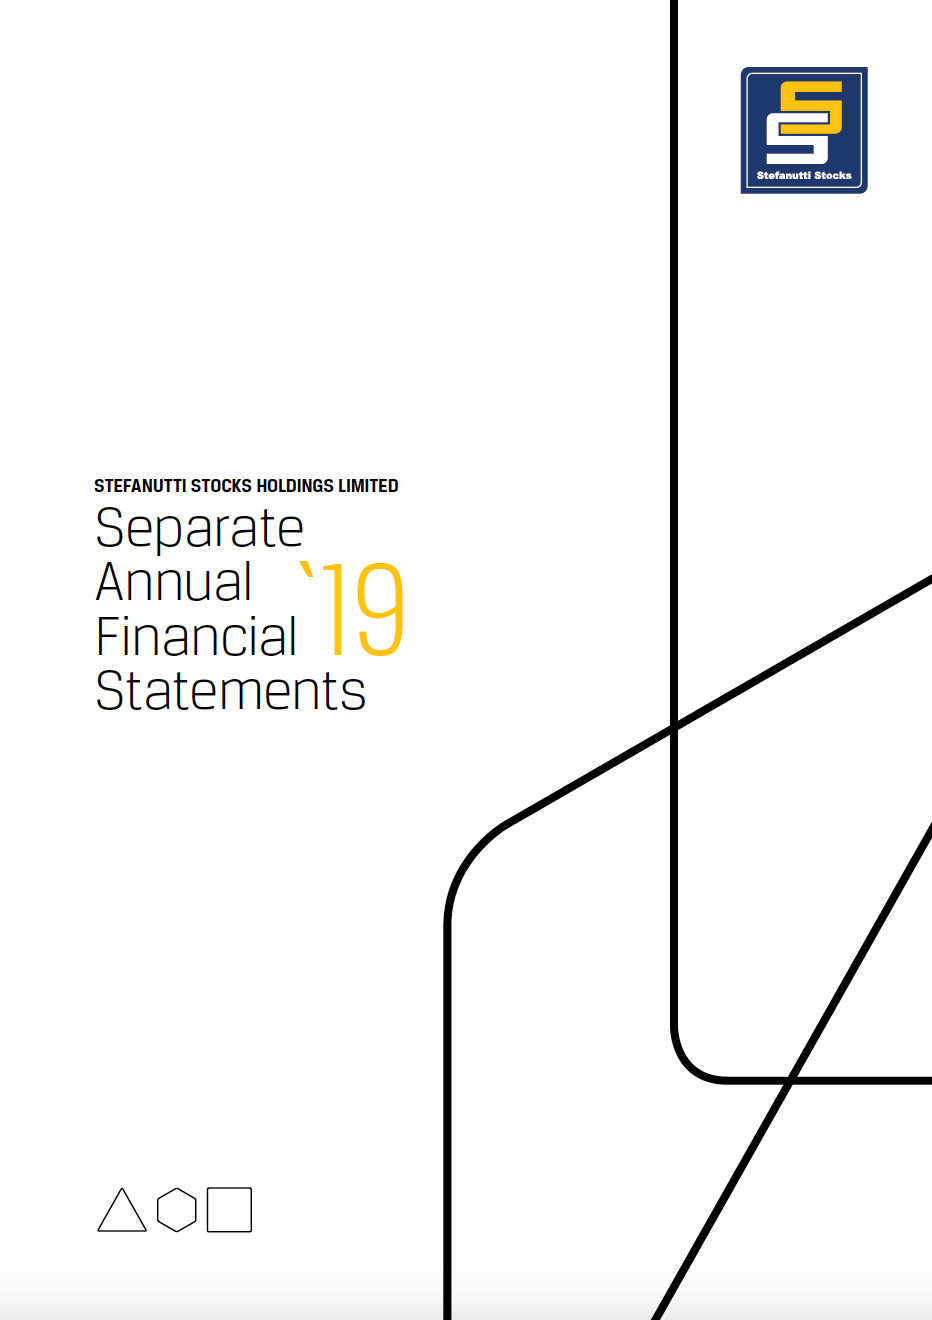 stefanutti-stocks-holdings-annual-financial-statements-2019